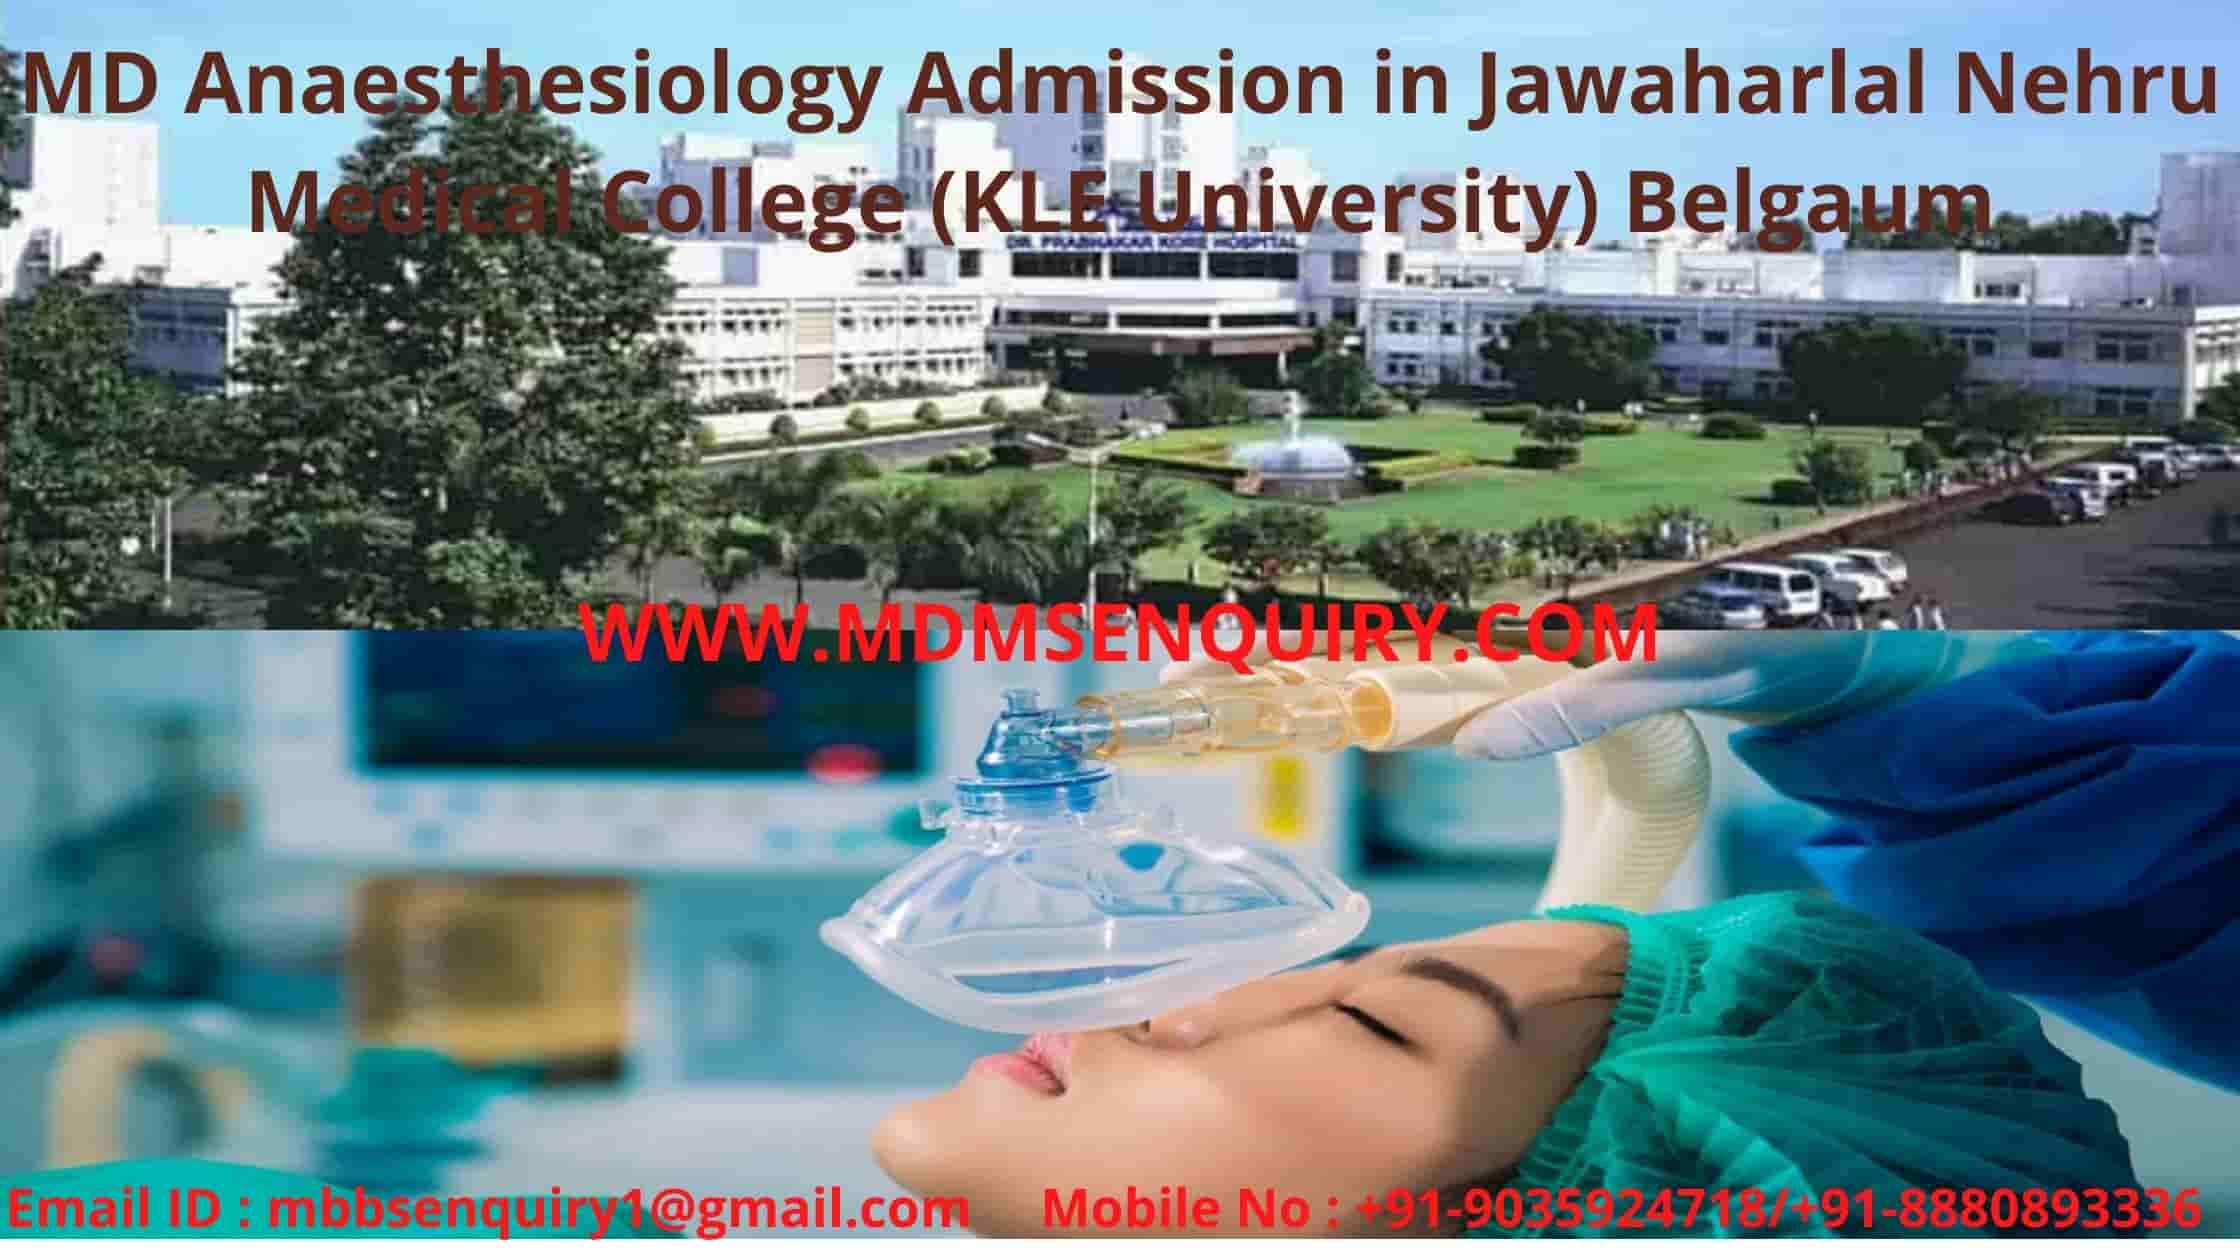 MD Anaesthesiology admission in Jawaharlal Nehru Medical College Belgaum